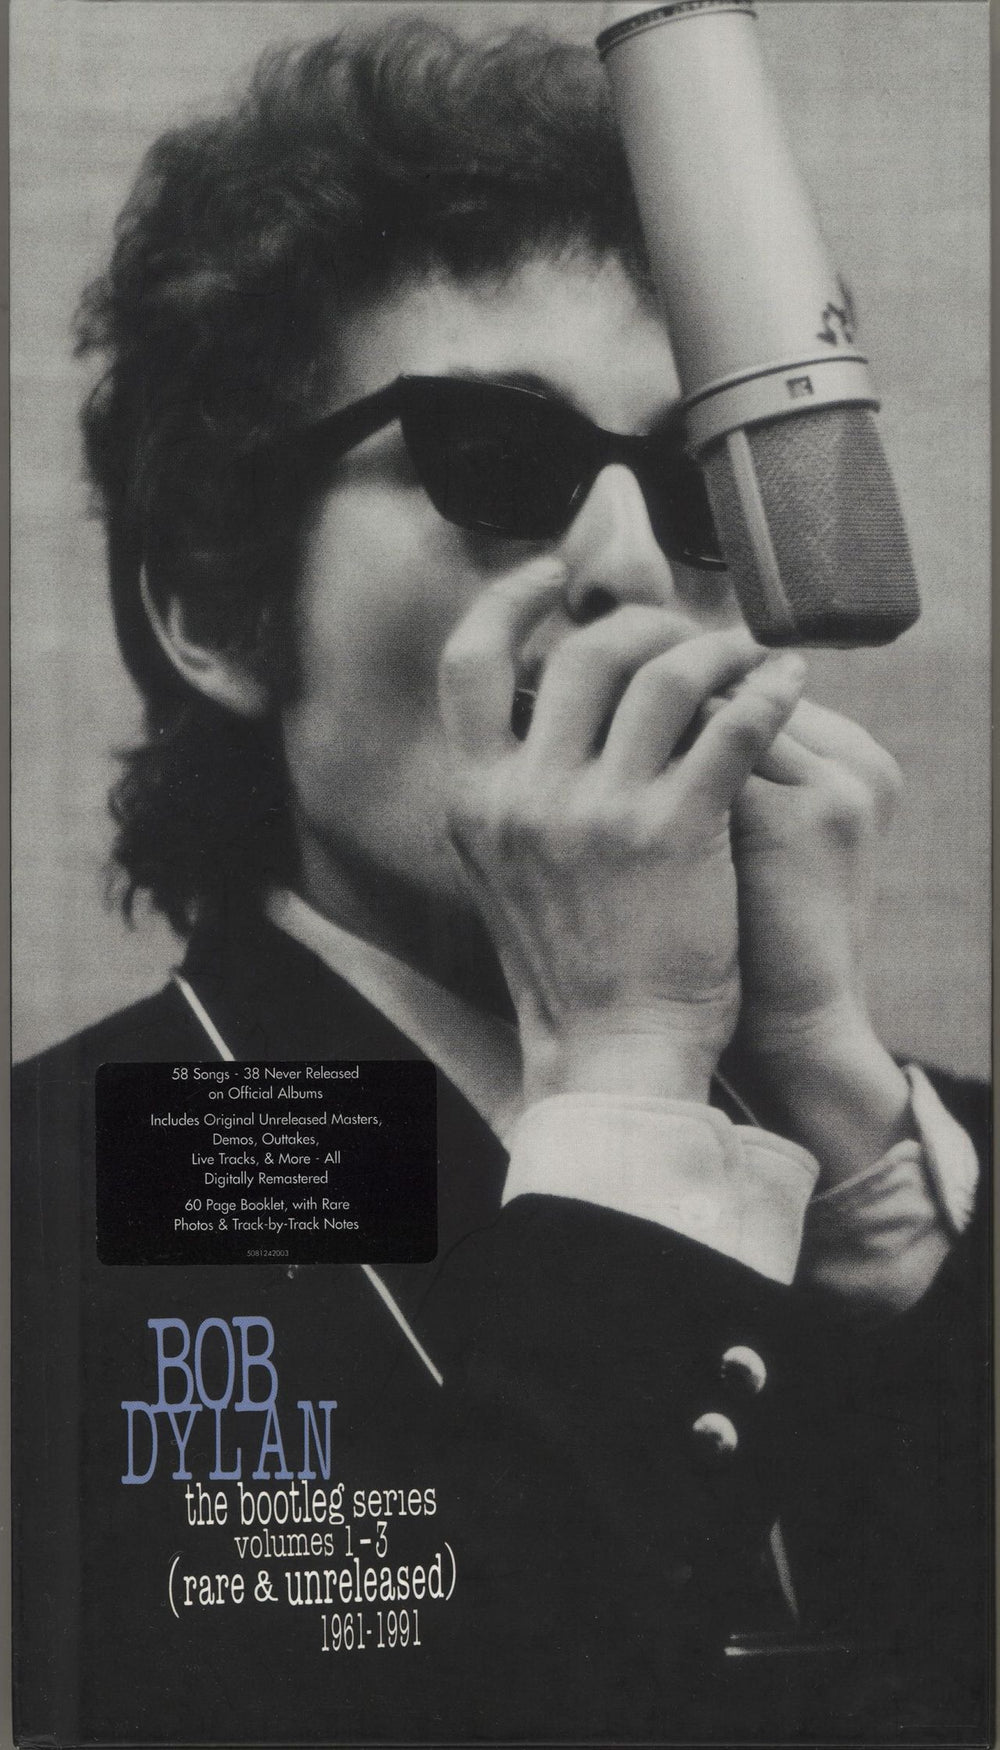 Bob Dylan The Bootleg Series Volumes 1-3 (Rare & Unreleased) 1961-1991 Austrian CD Album Box Set 5081242000